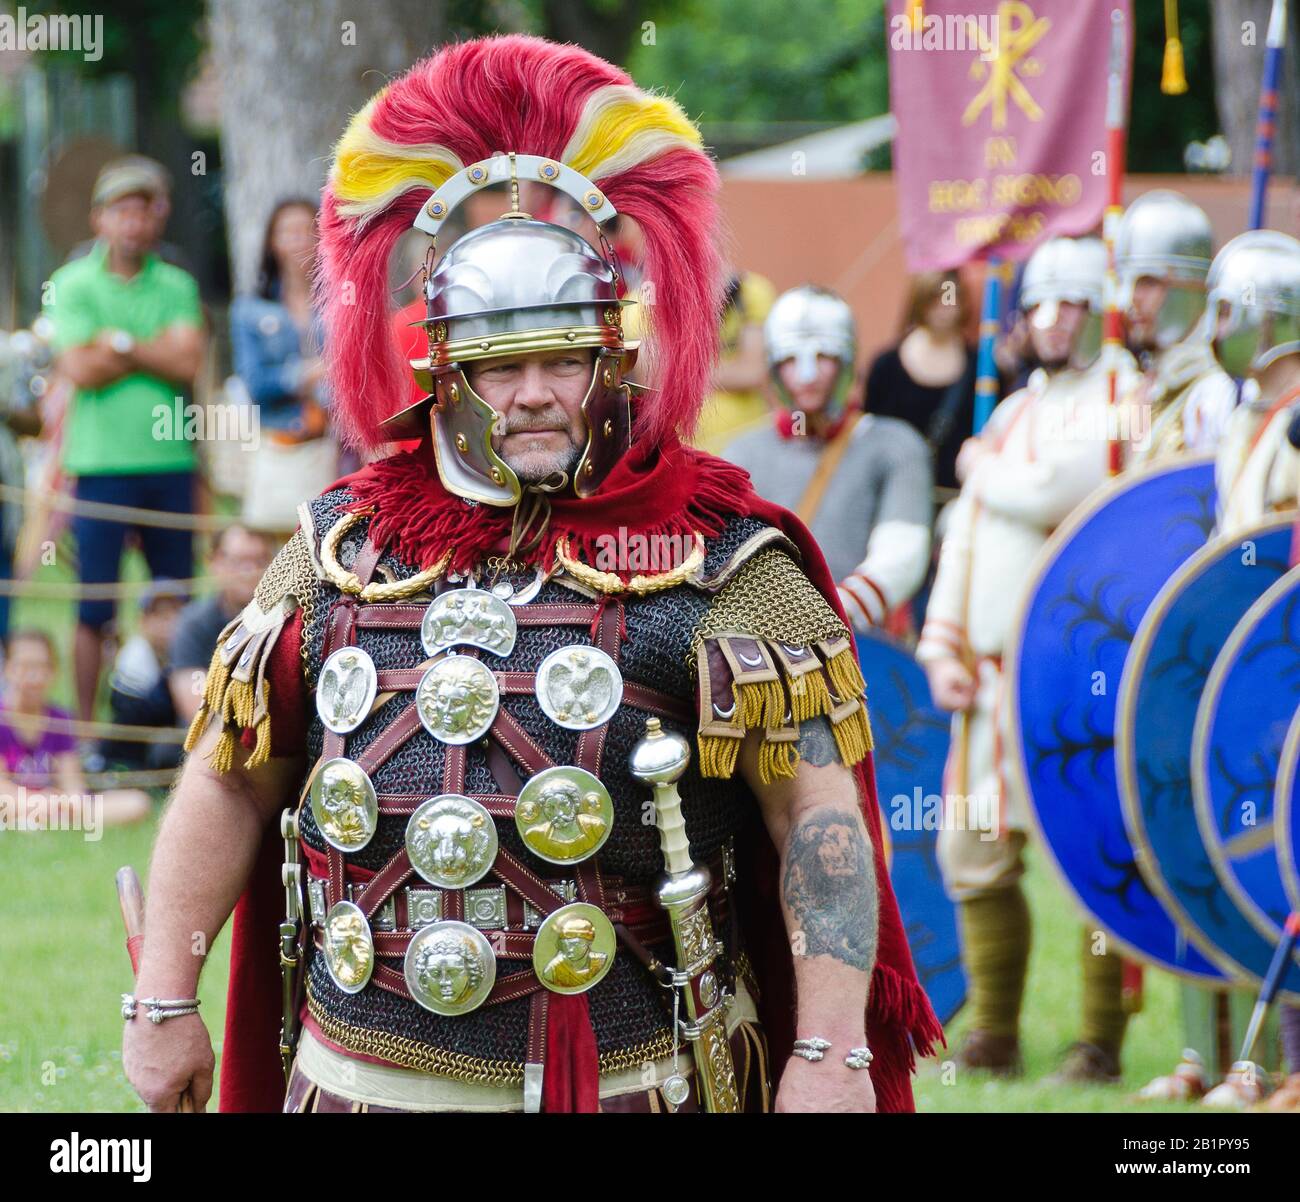 Reenactor representing a commander of the roman camp at the Roman festival of Carnuntum, Austria Stock Photo